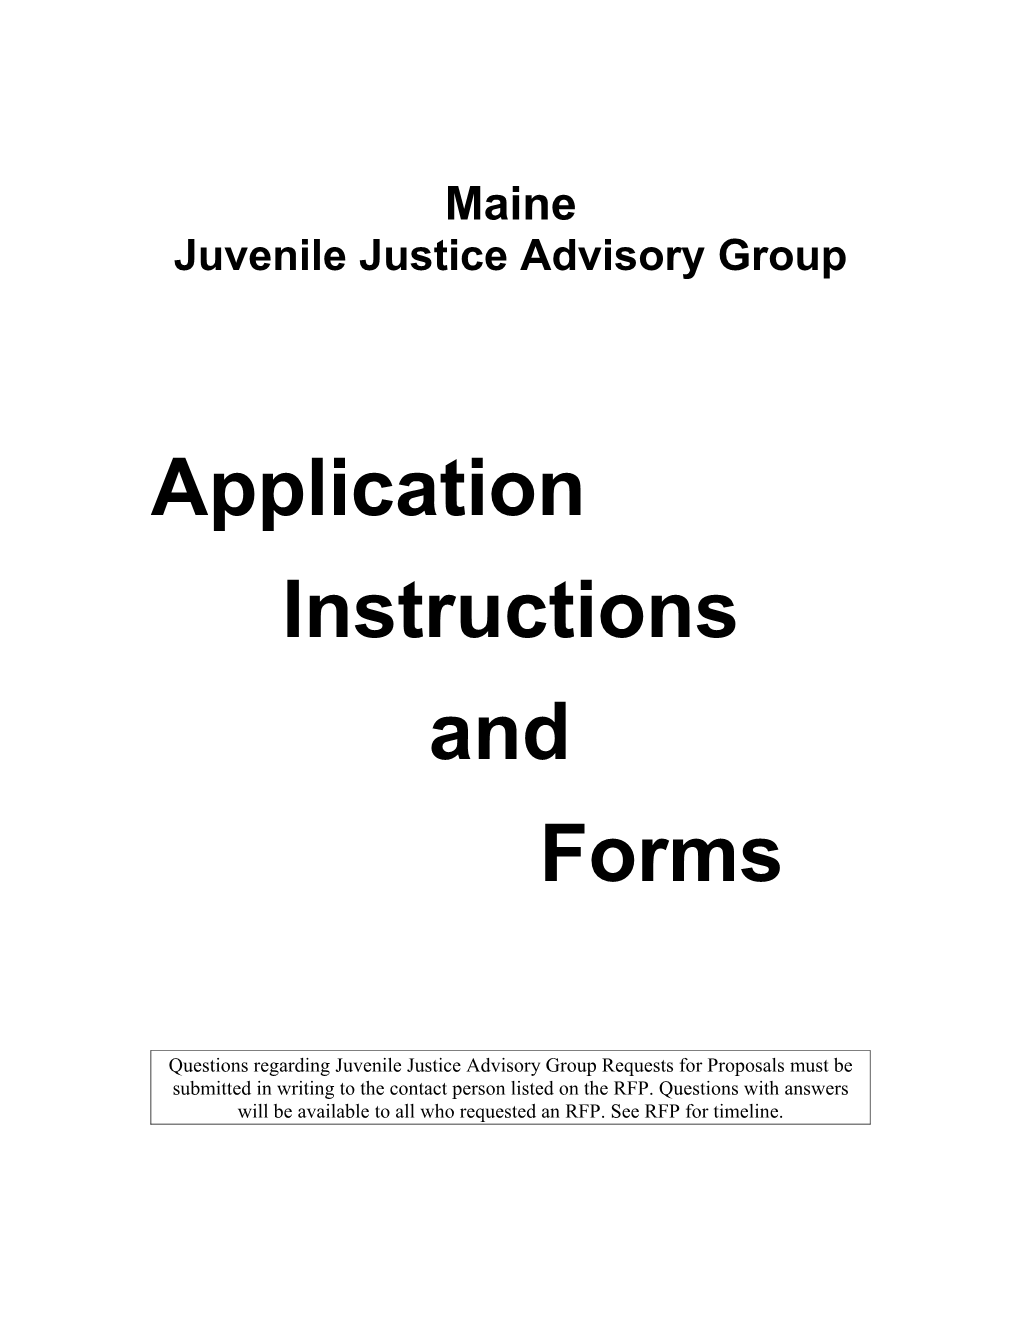 Juvenile Justice Advisory Group (JJAG)